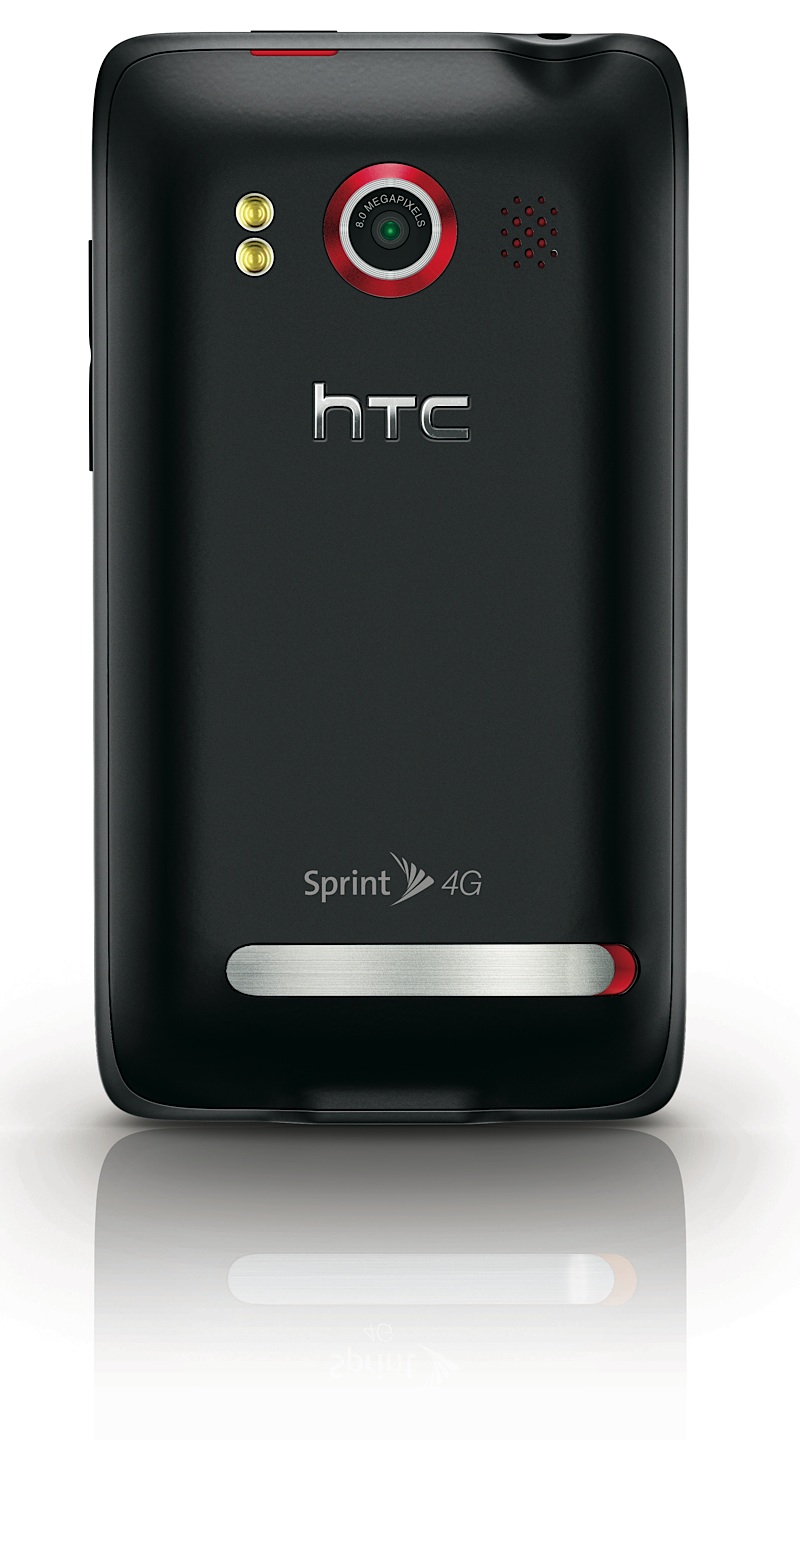 Smartfony HTC